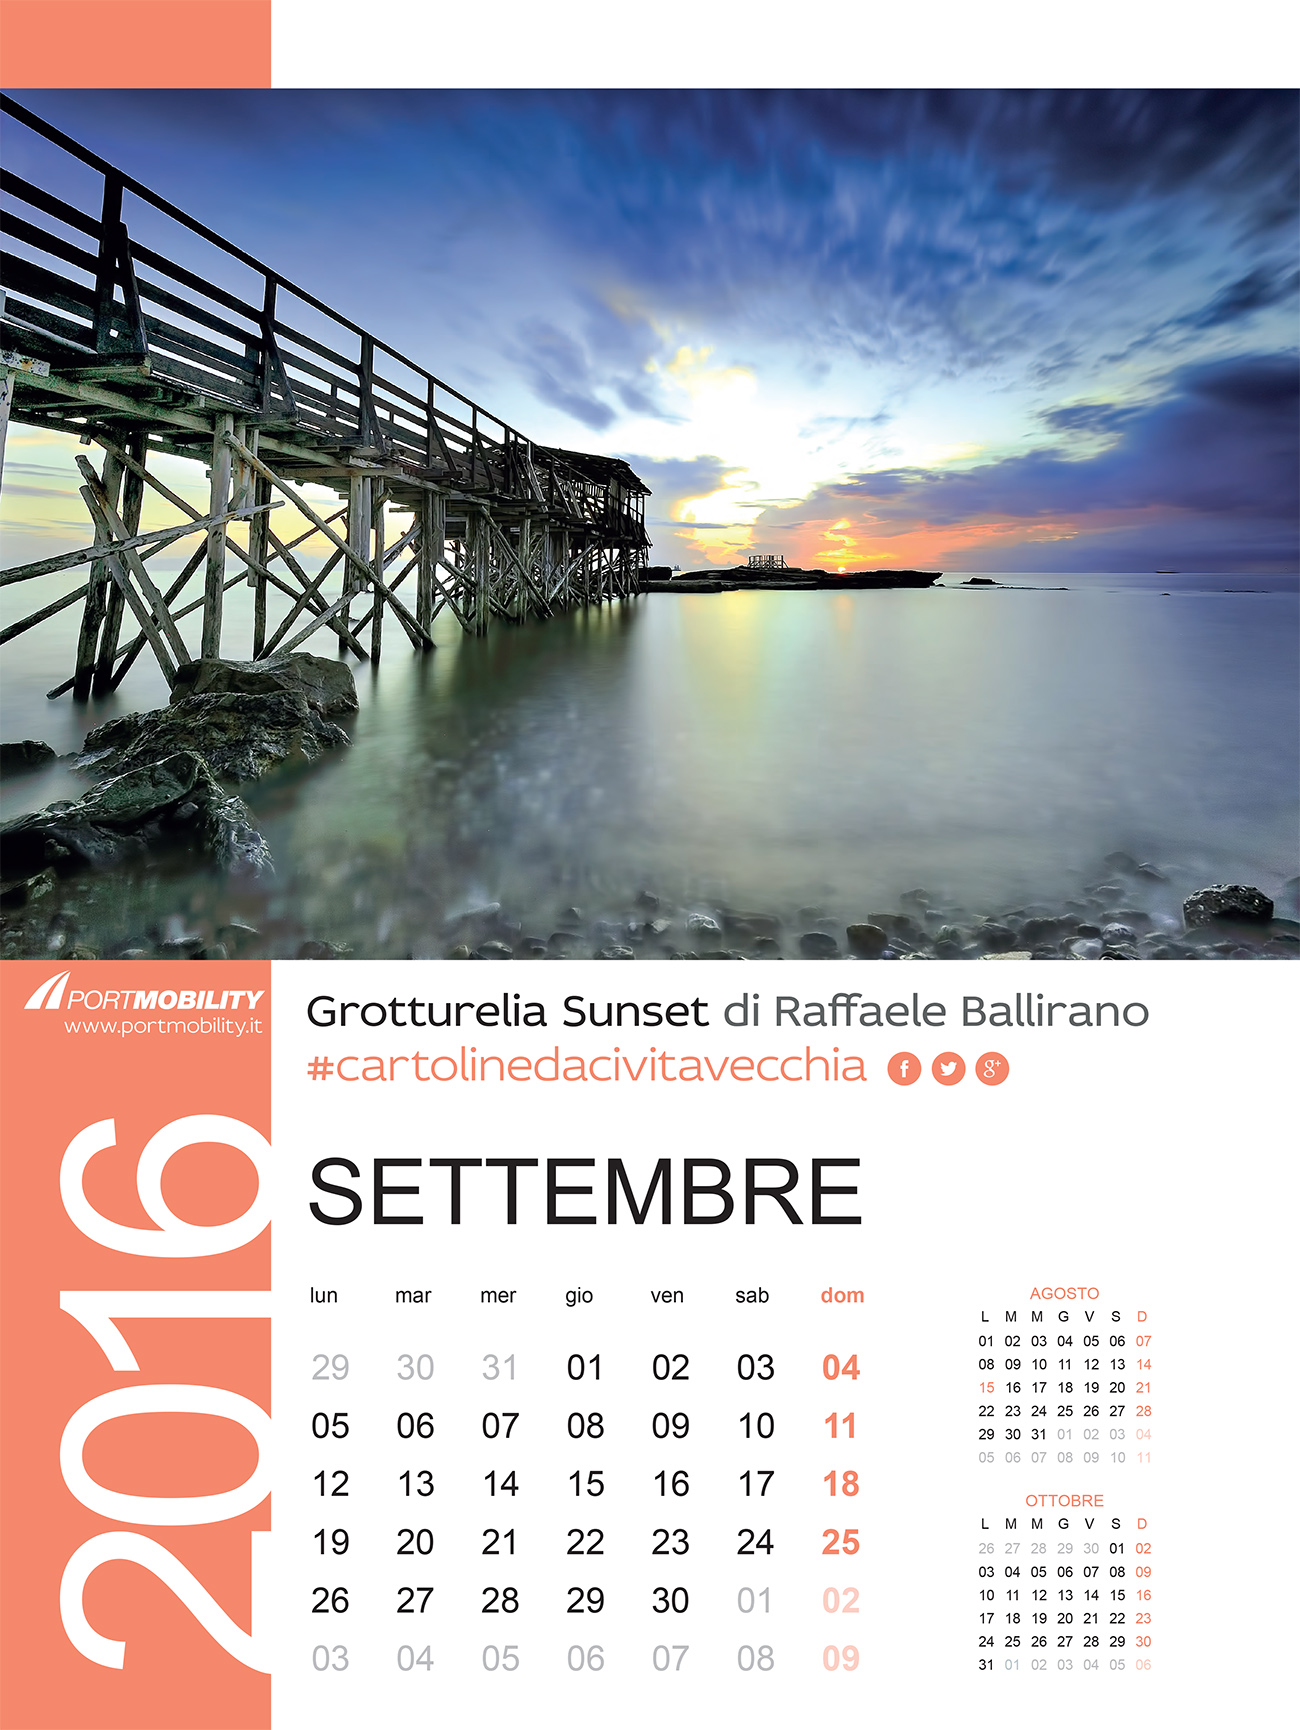 Postcards from Civitavecchia: September 2016